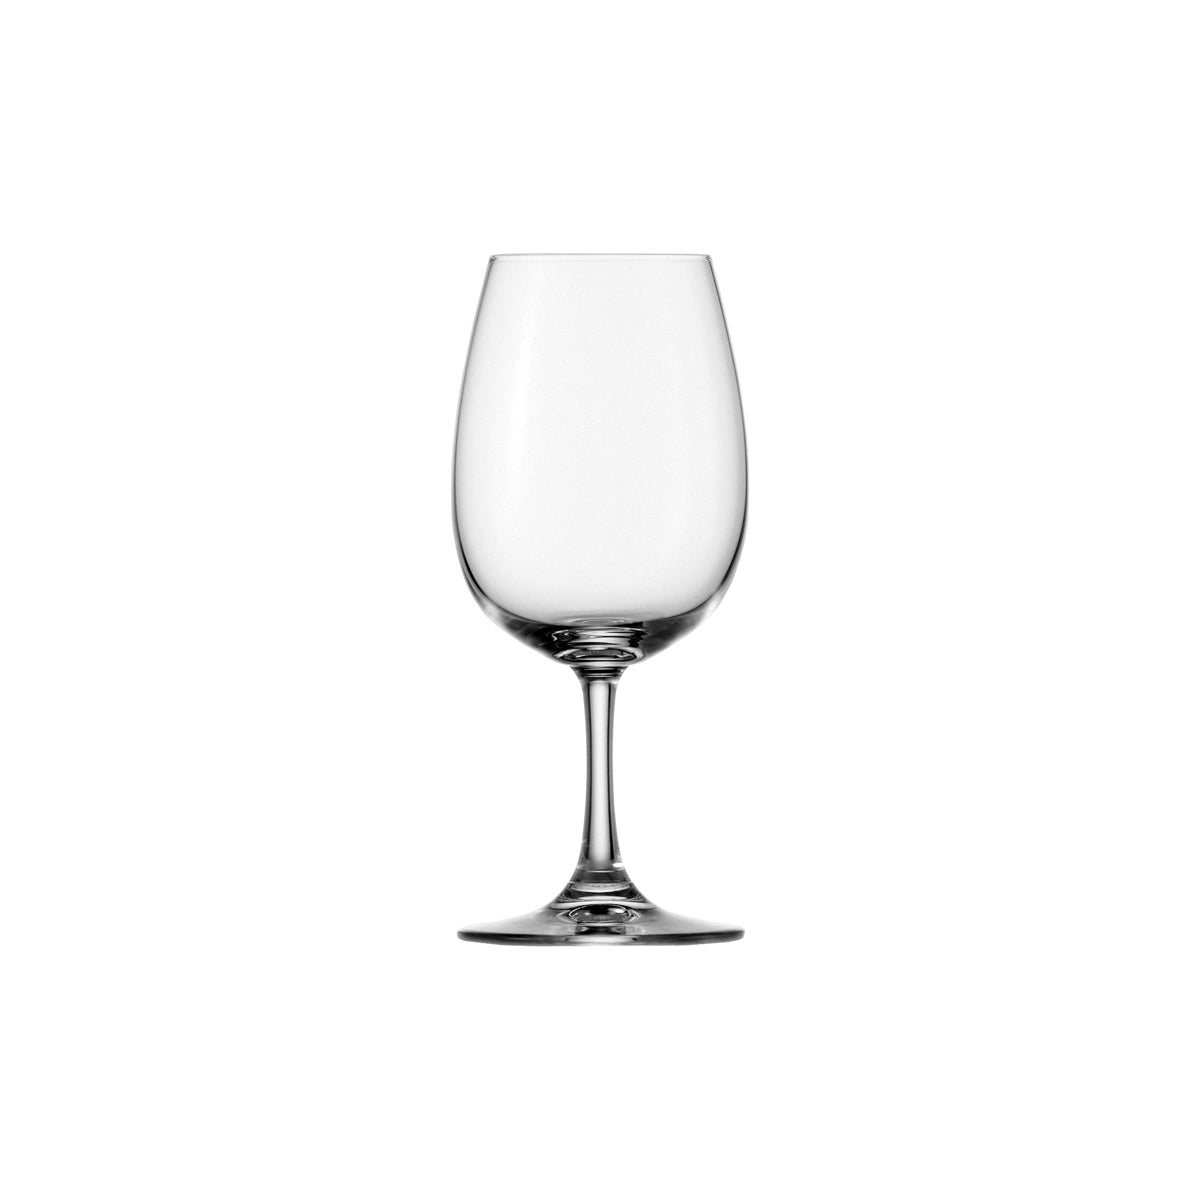 360-899 Stolzle Weinland White Wine 350ml Short Stem Tomkin Australia Hospitality Supplies